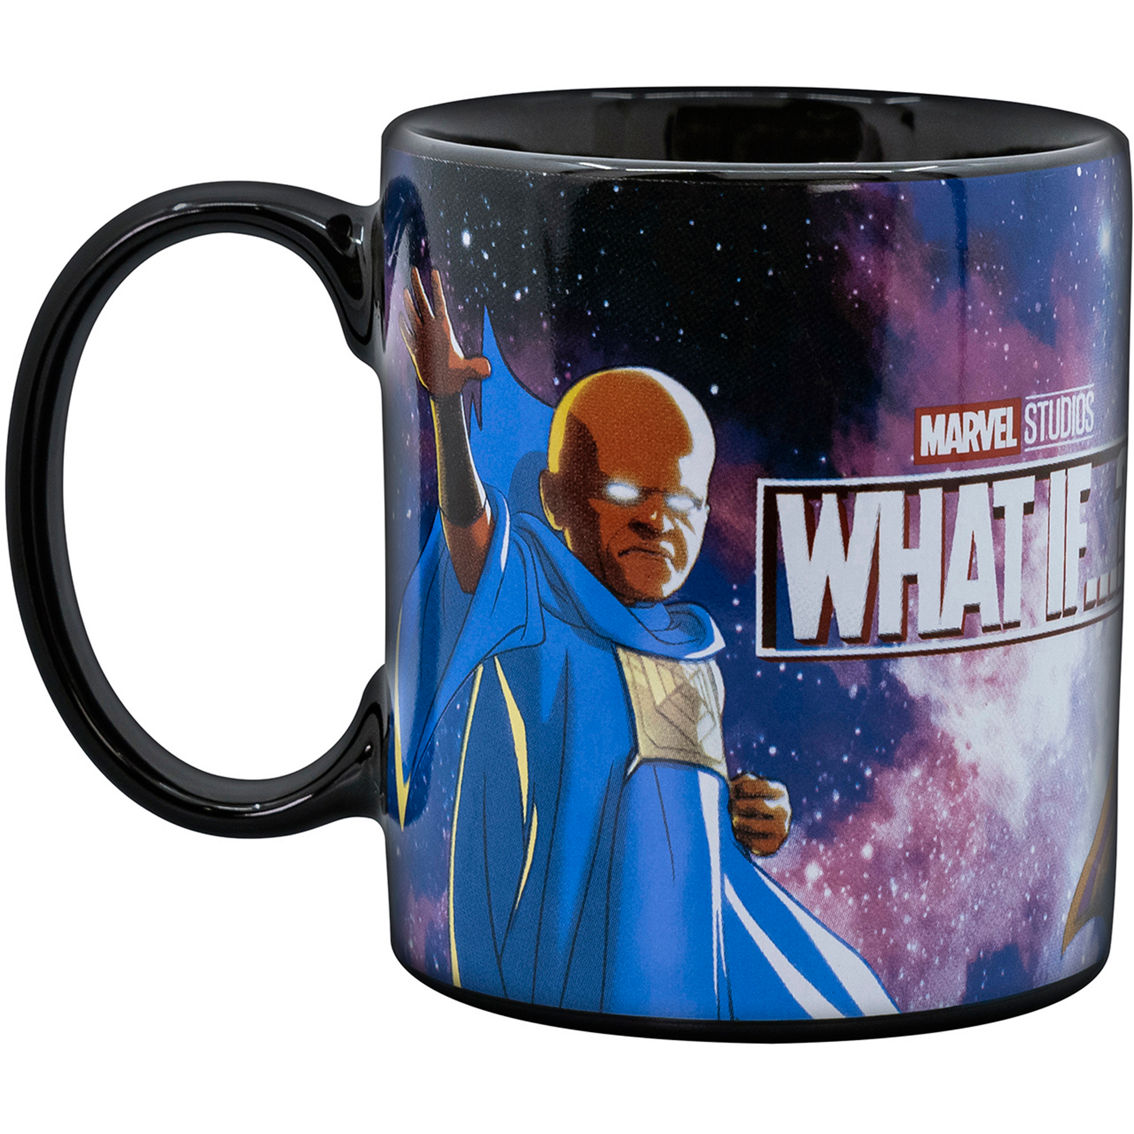 Uncanny Brands Marvel What If Mug Warmer with Mug - Image 5 of 10